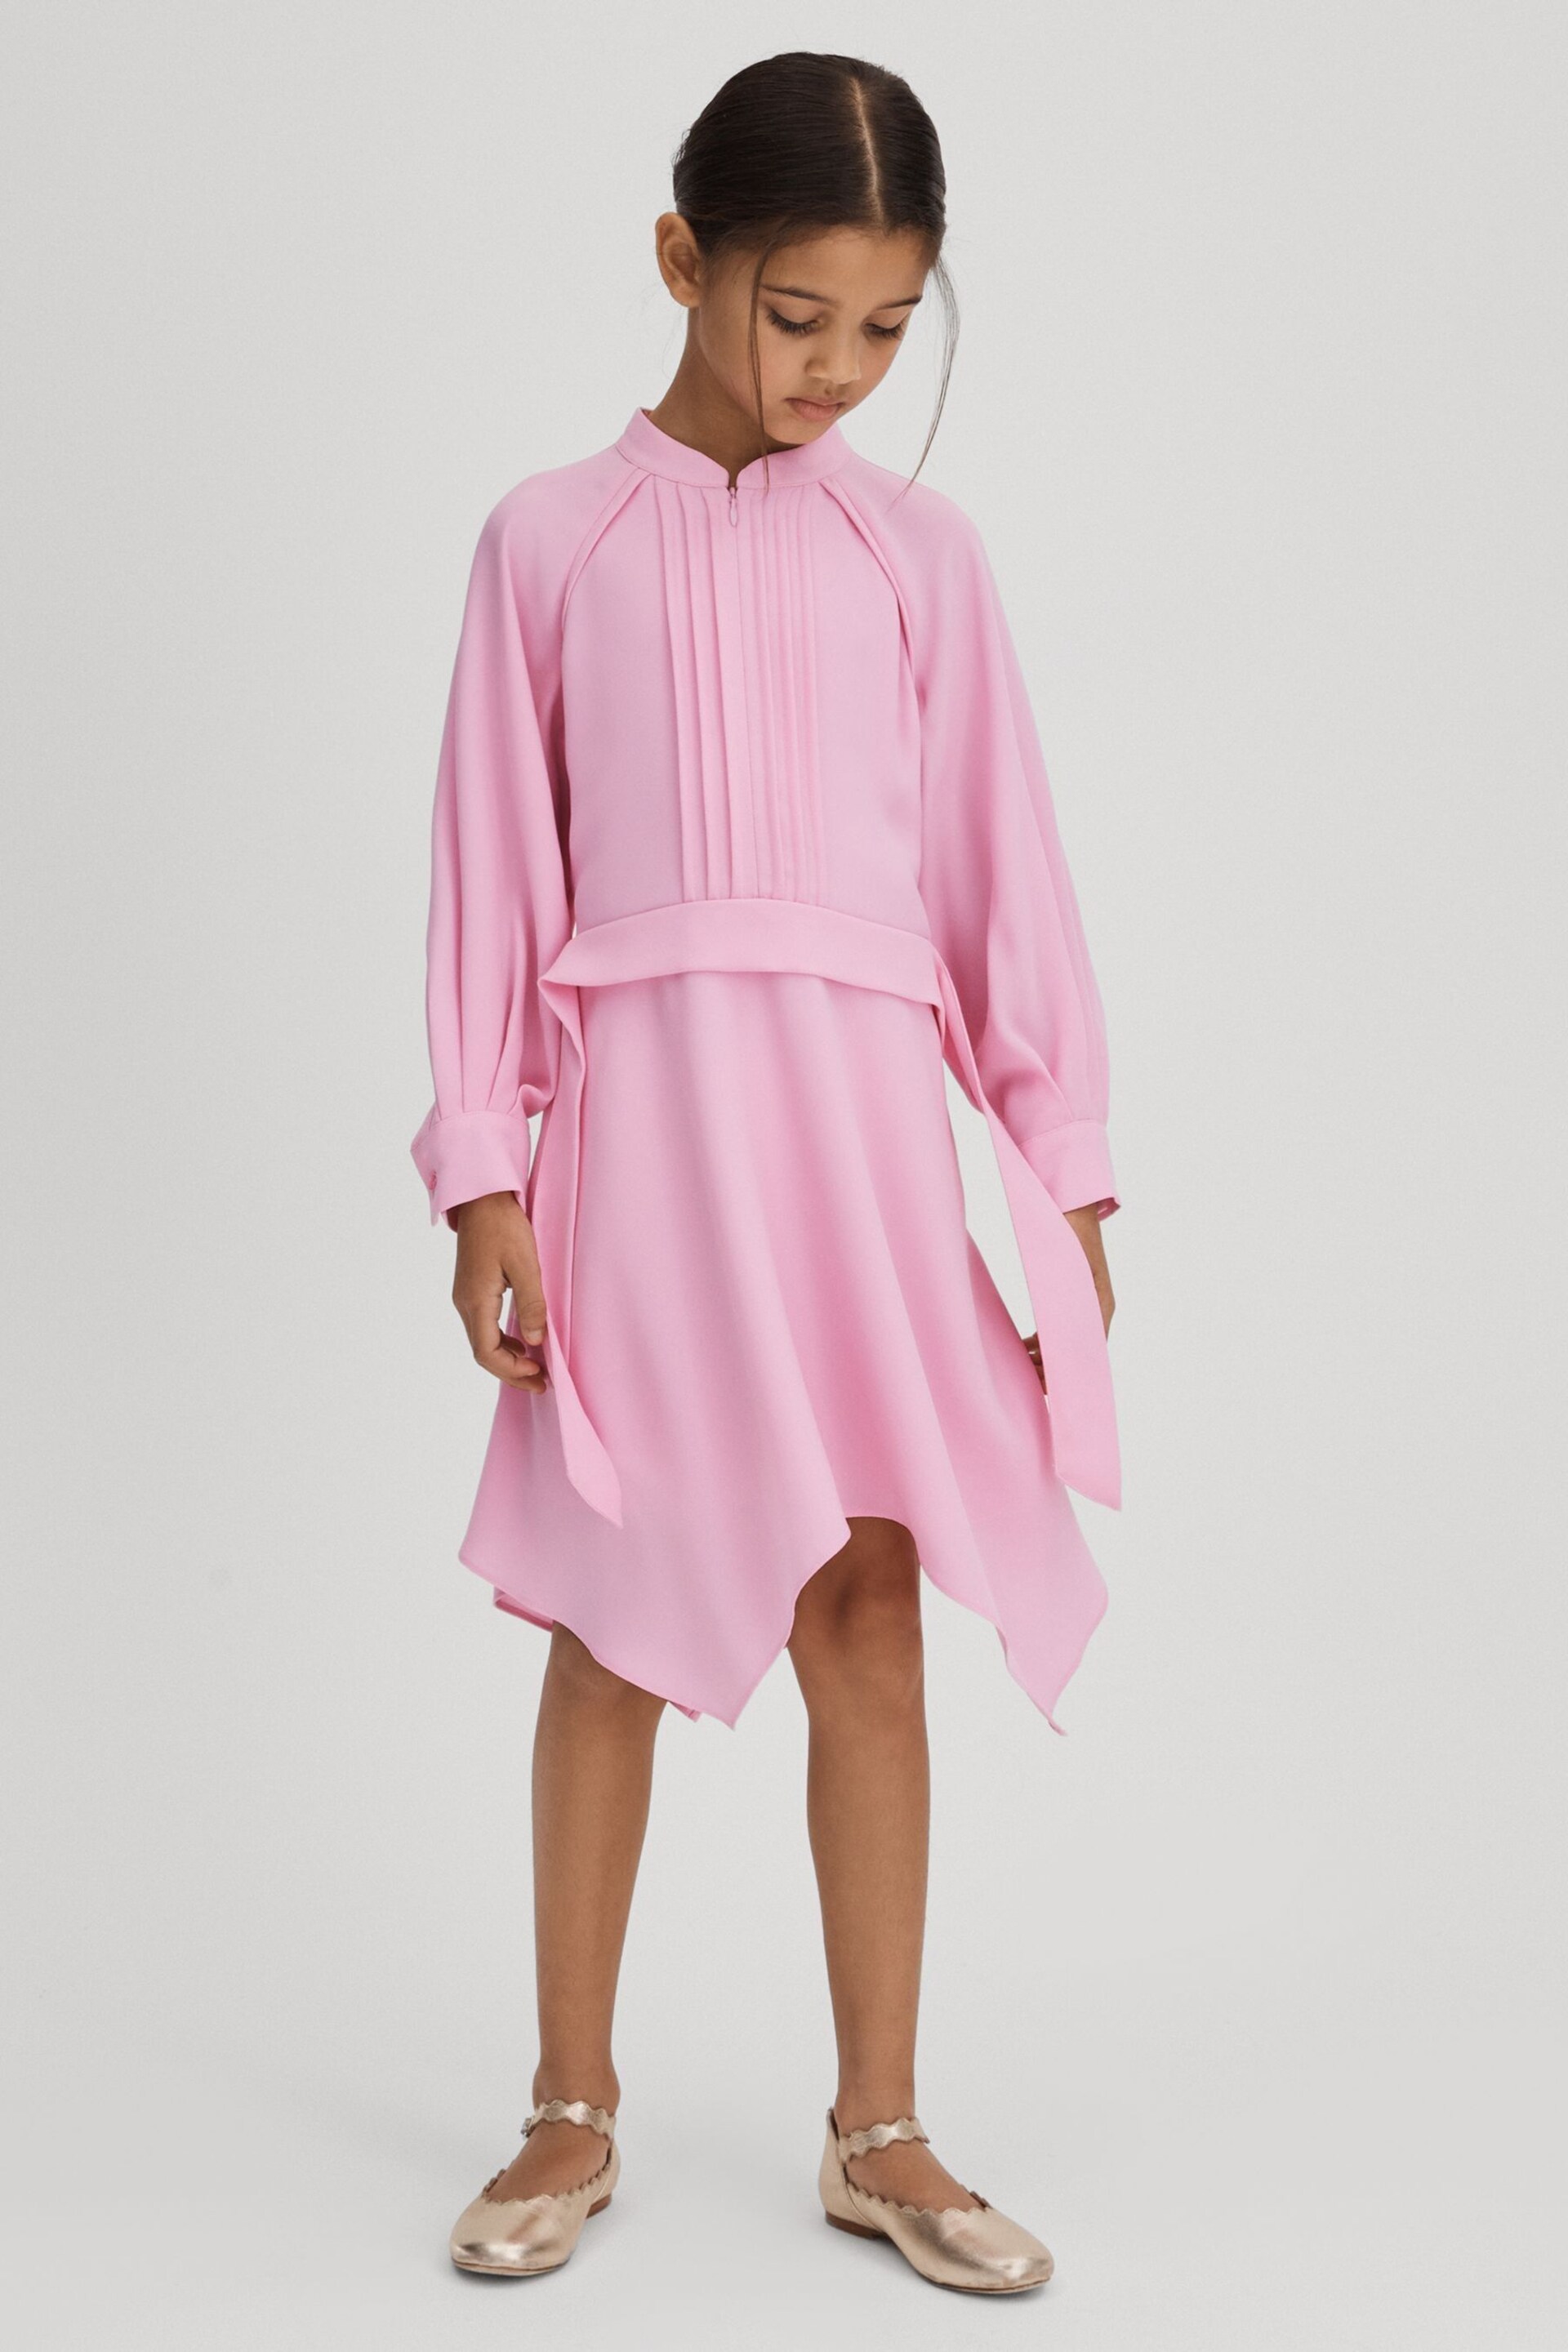 Reiss Pink Erica Senior Zip Front Asymmetric Dress - Image 1 of 6